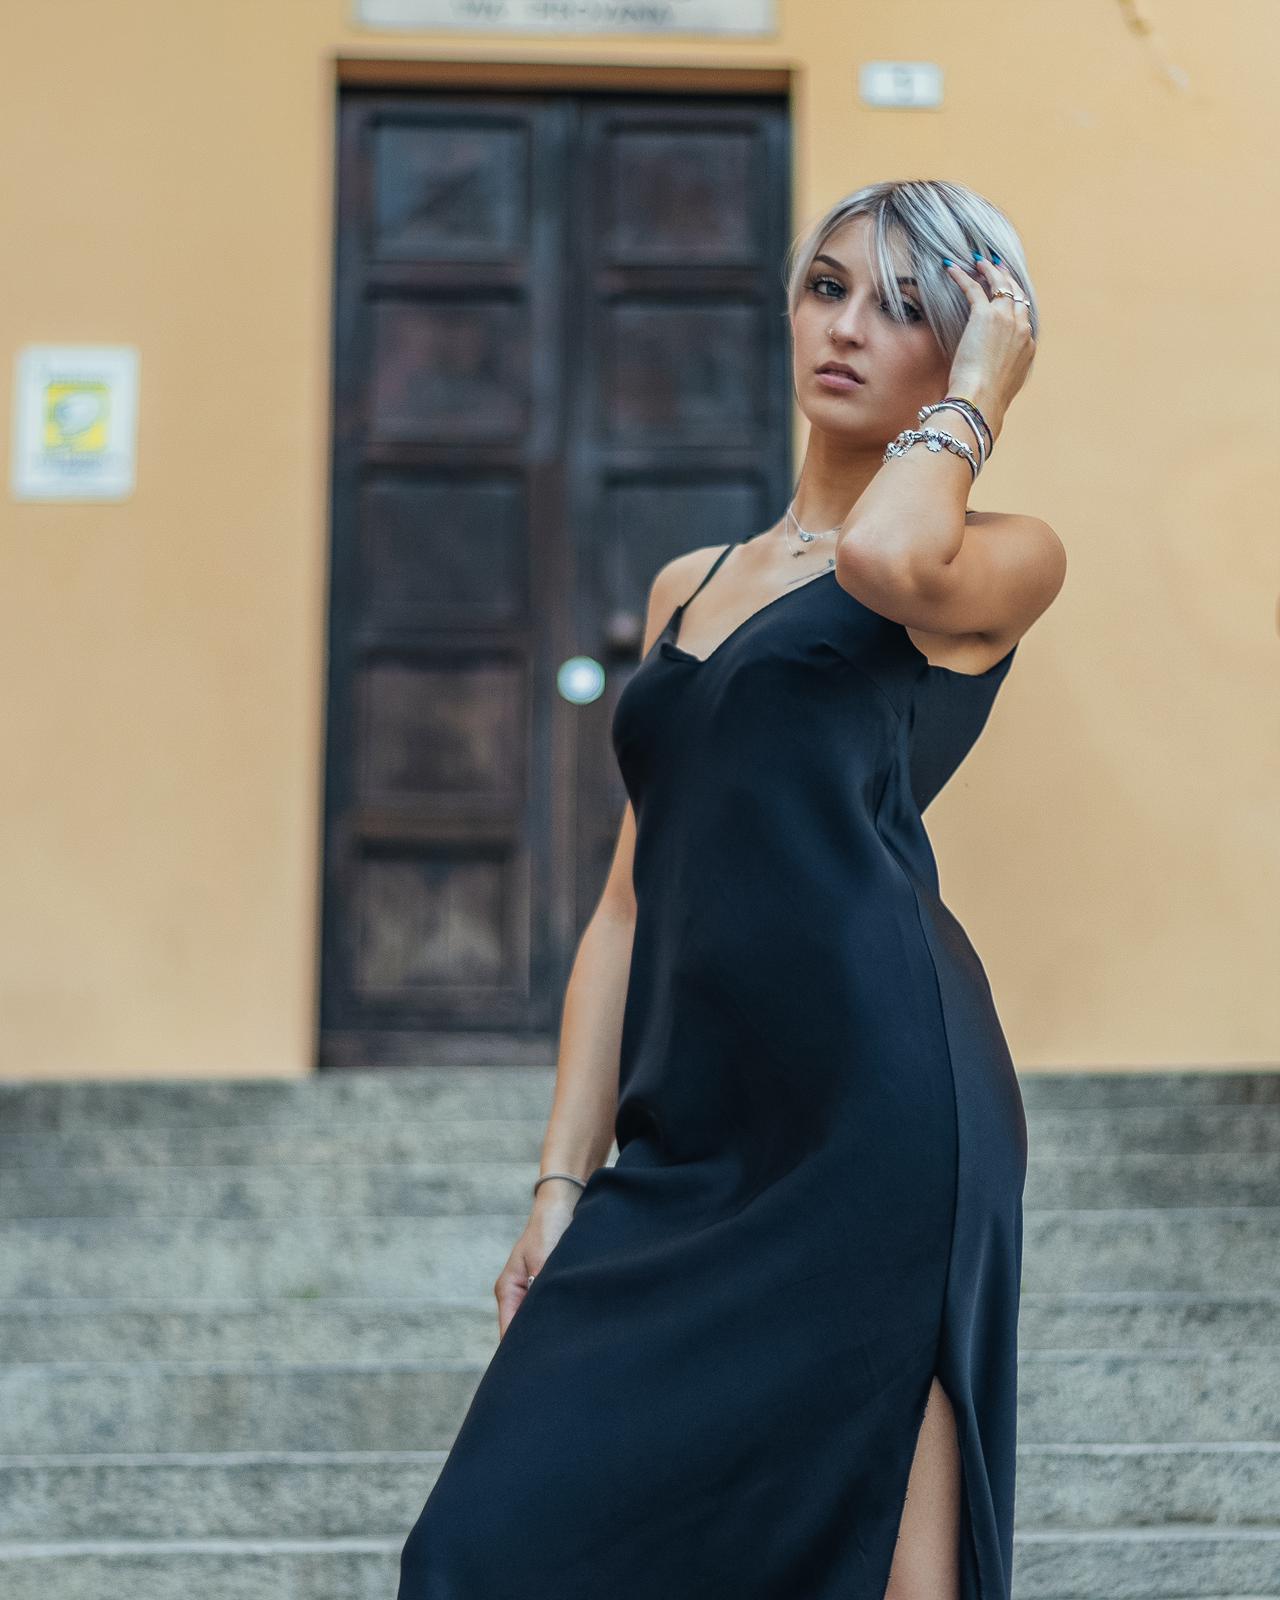 Categorie: Fashion, Glamour, Portrait - Photographer: CHRISTIAN ZINFOLLINO - Model: CATERINA CORONA (_caterinacorona_) - Location: Torino, TO, Italia